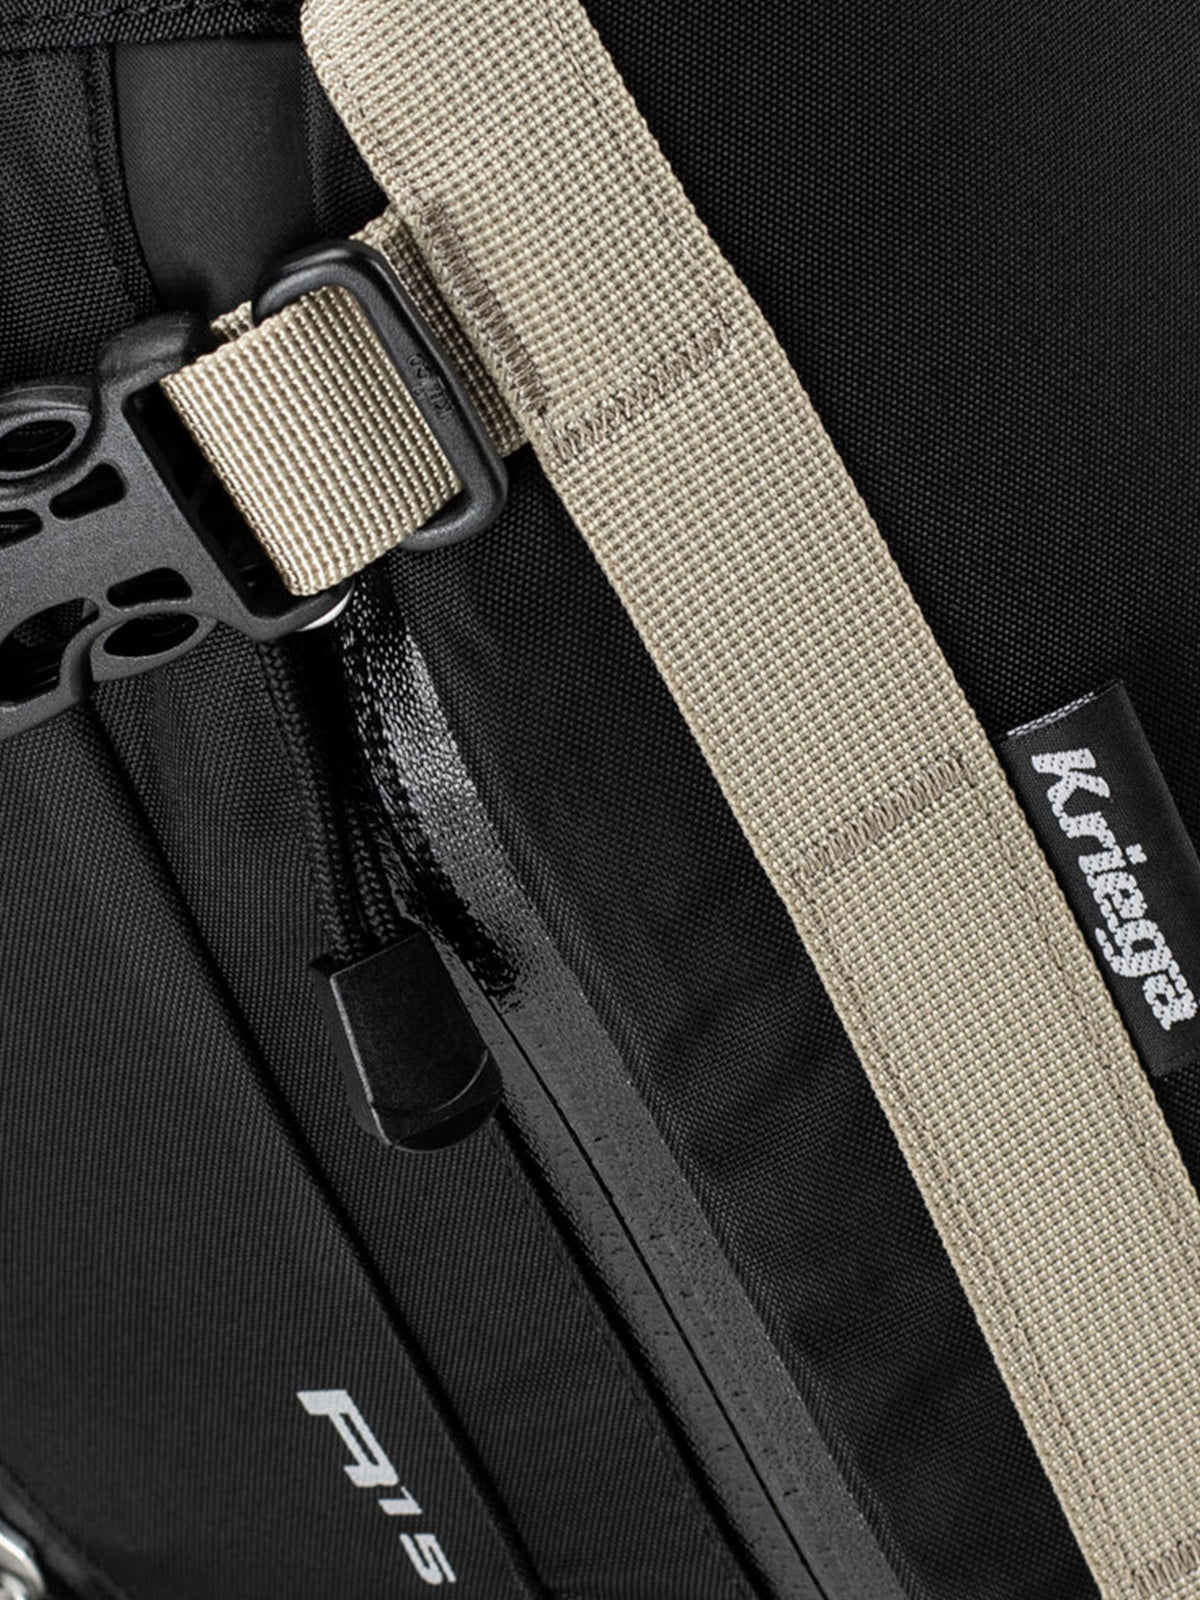 Kriega R15 Backpack detail of straps